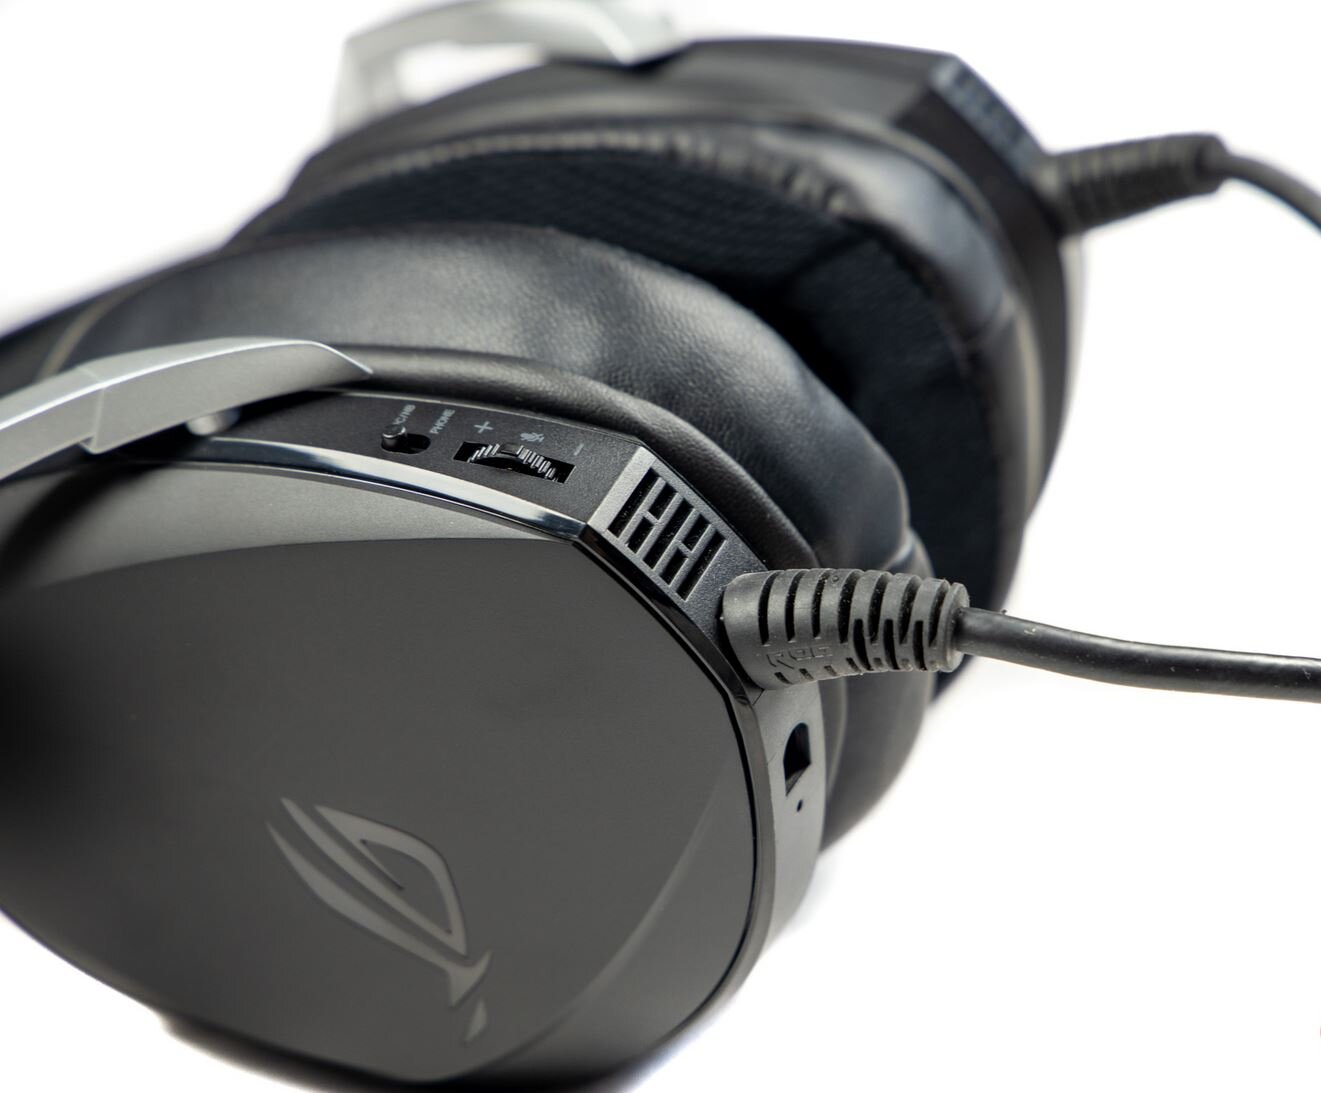 ASUS ROG Theta 7.1 review — Flagship gaming headset 